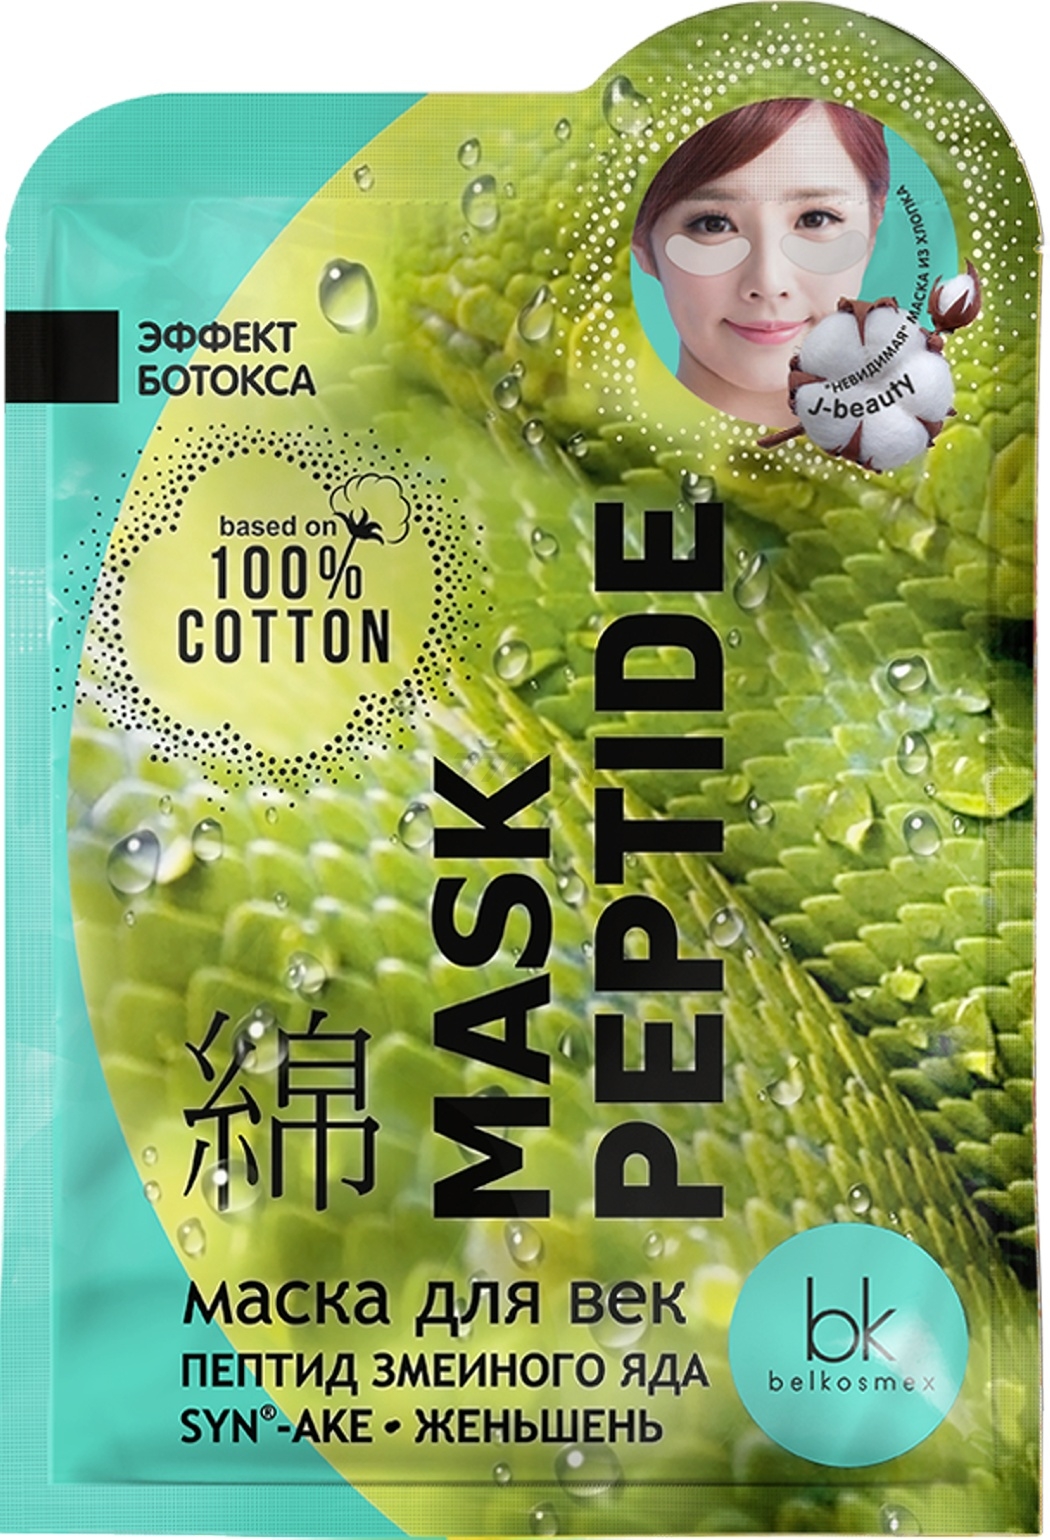 Патчи под глаза BELKOSMEX J-Beauty Mask Peptide Пептид змеиного яда Syn-Ake Женьшень 2 штуки (4810090010485)